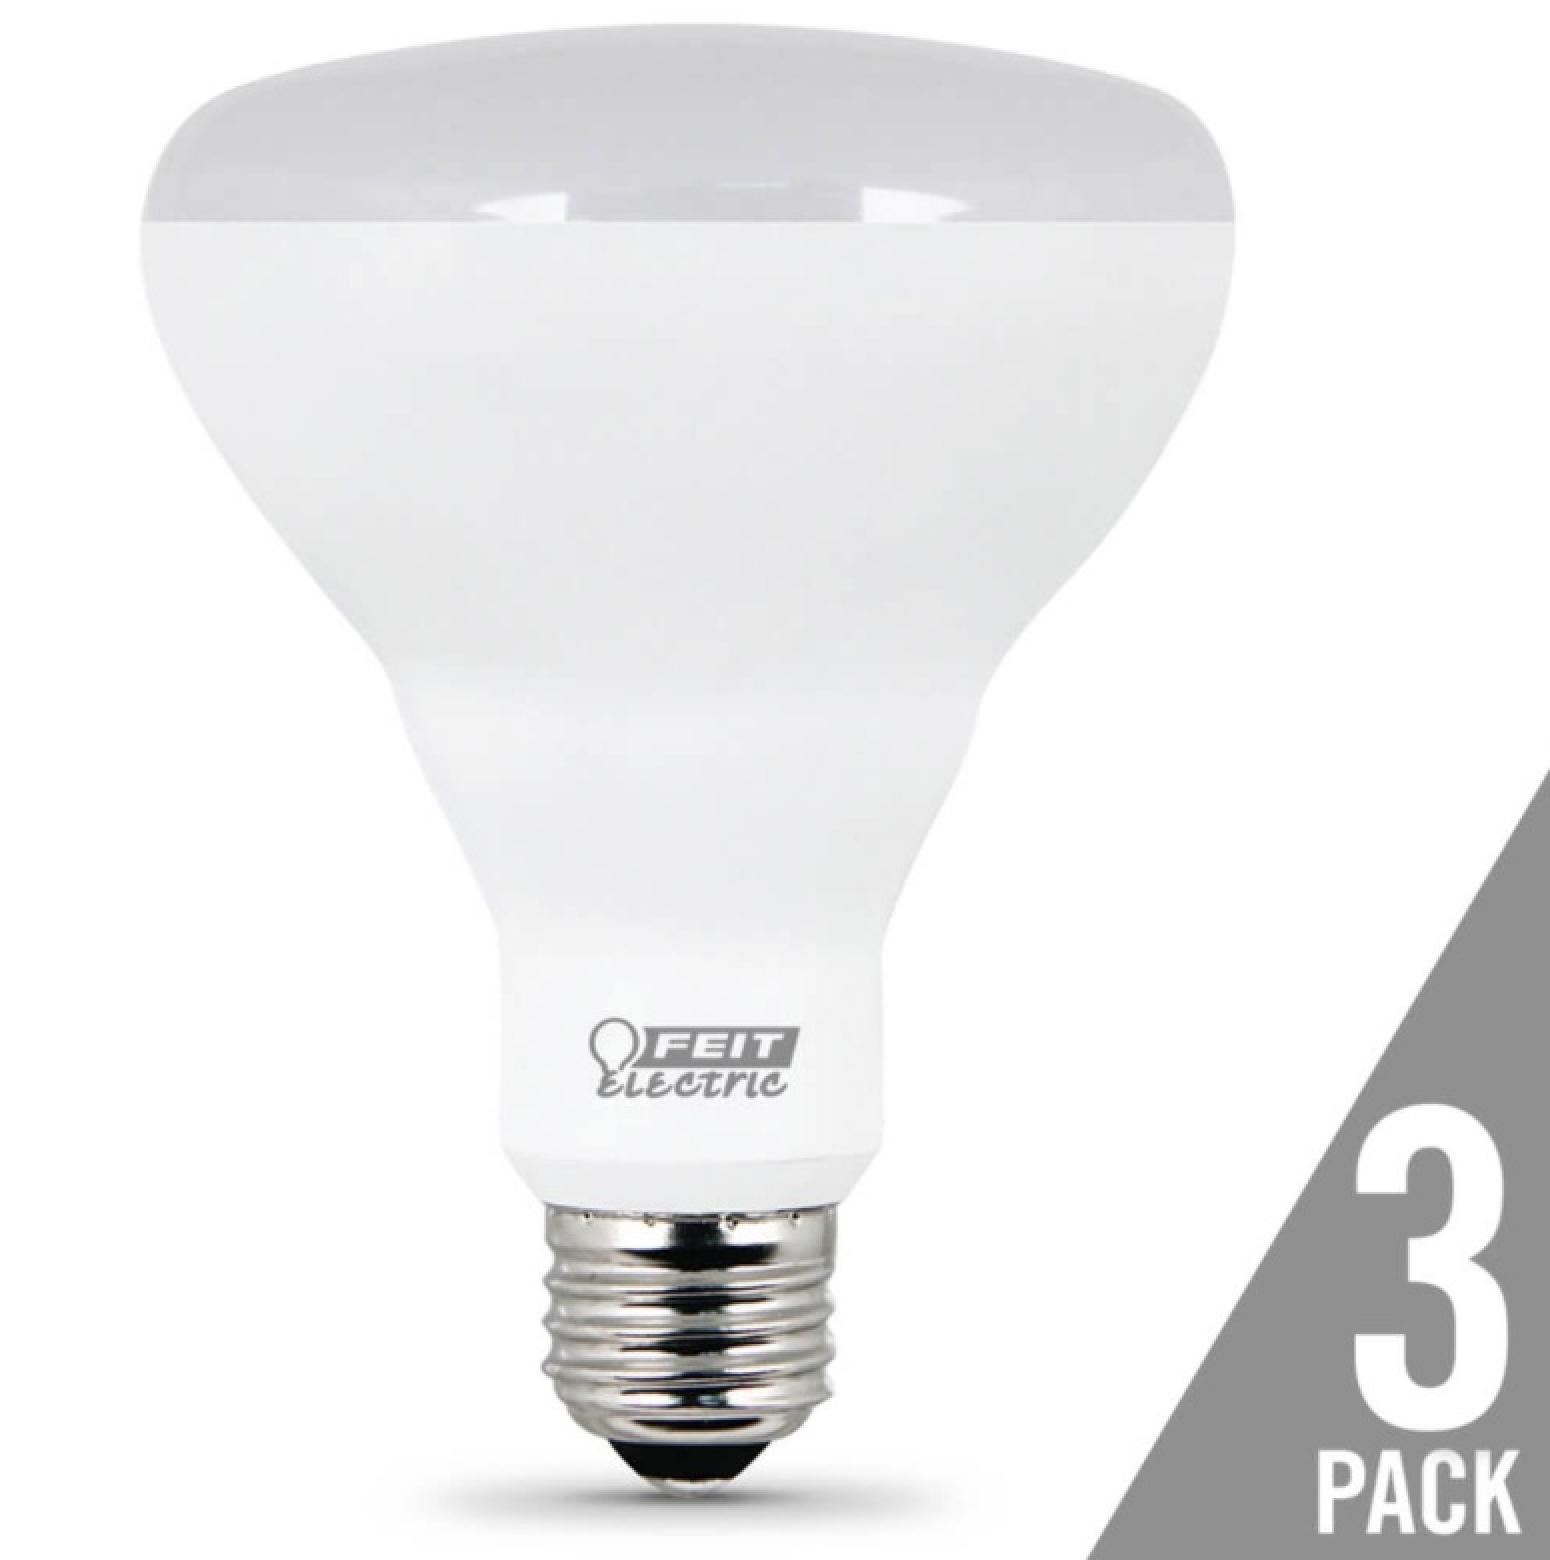 Feit Electric LED 65 Watt Equivalent 650 Lumen Non-Dimmable Reflector Light Bulb (3 Pack)